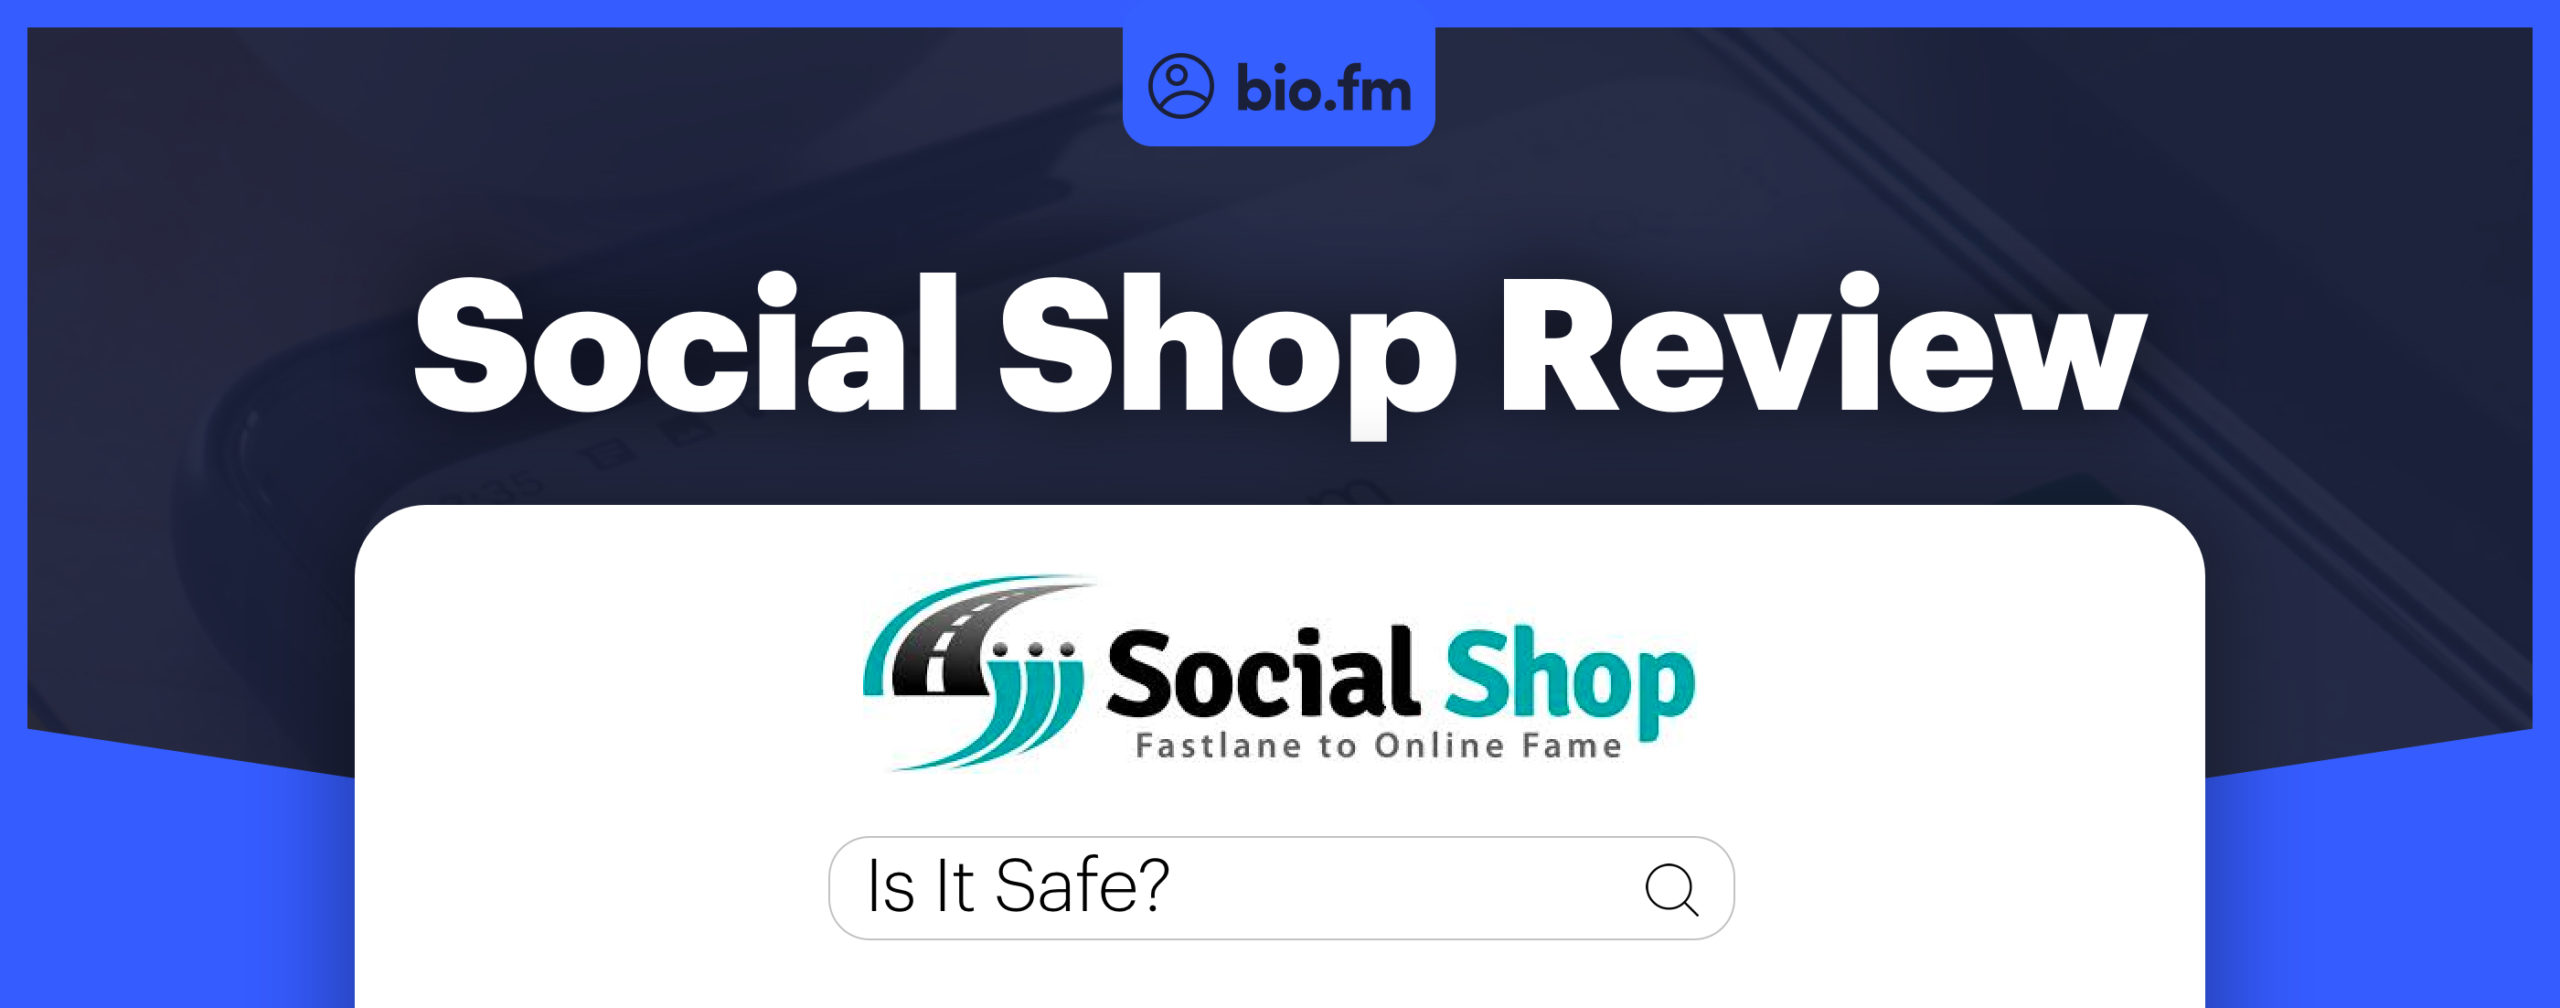 socialshop review featured image